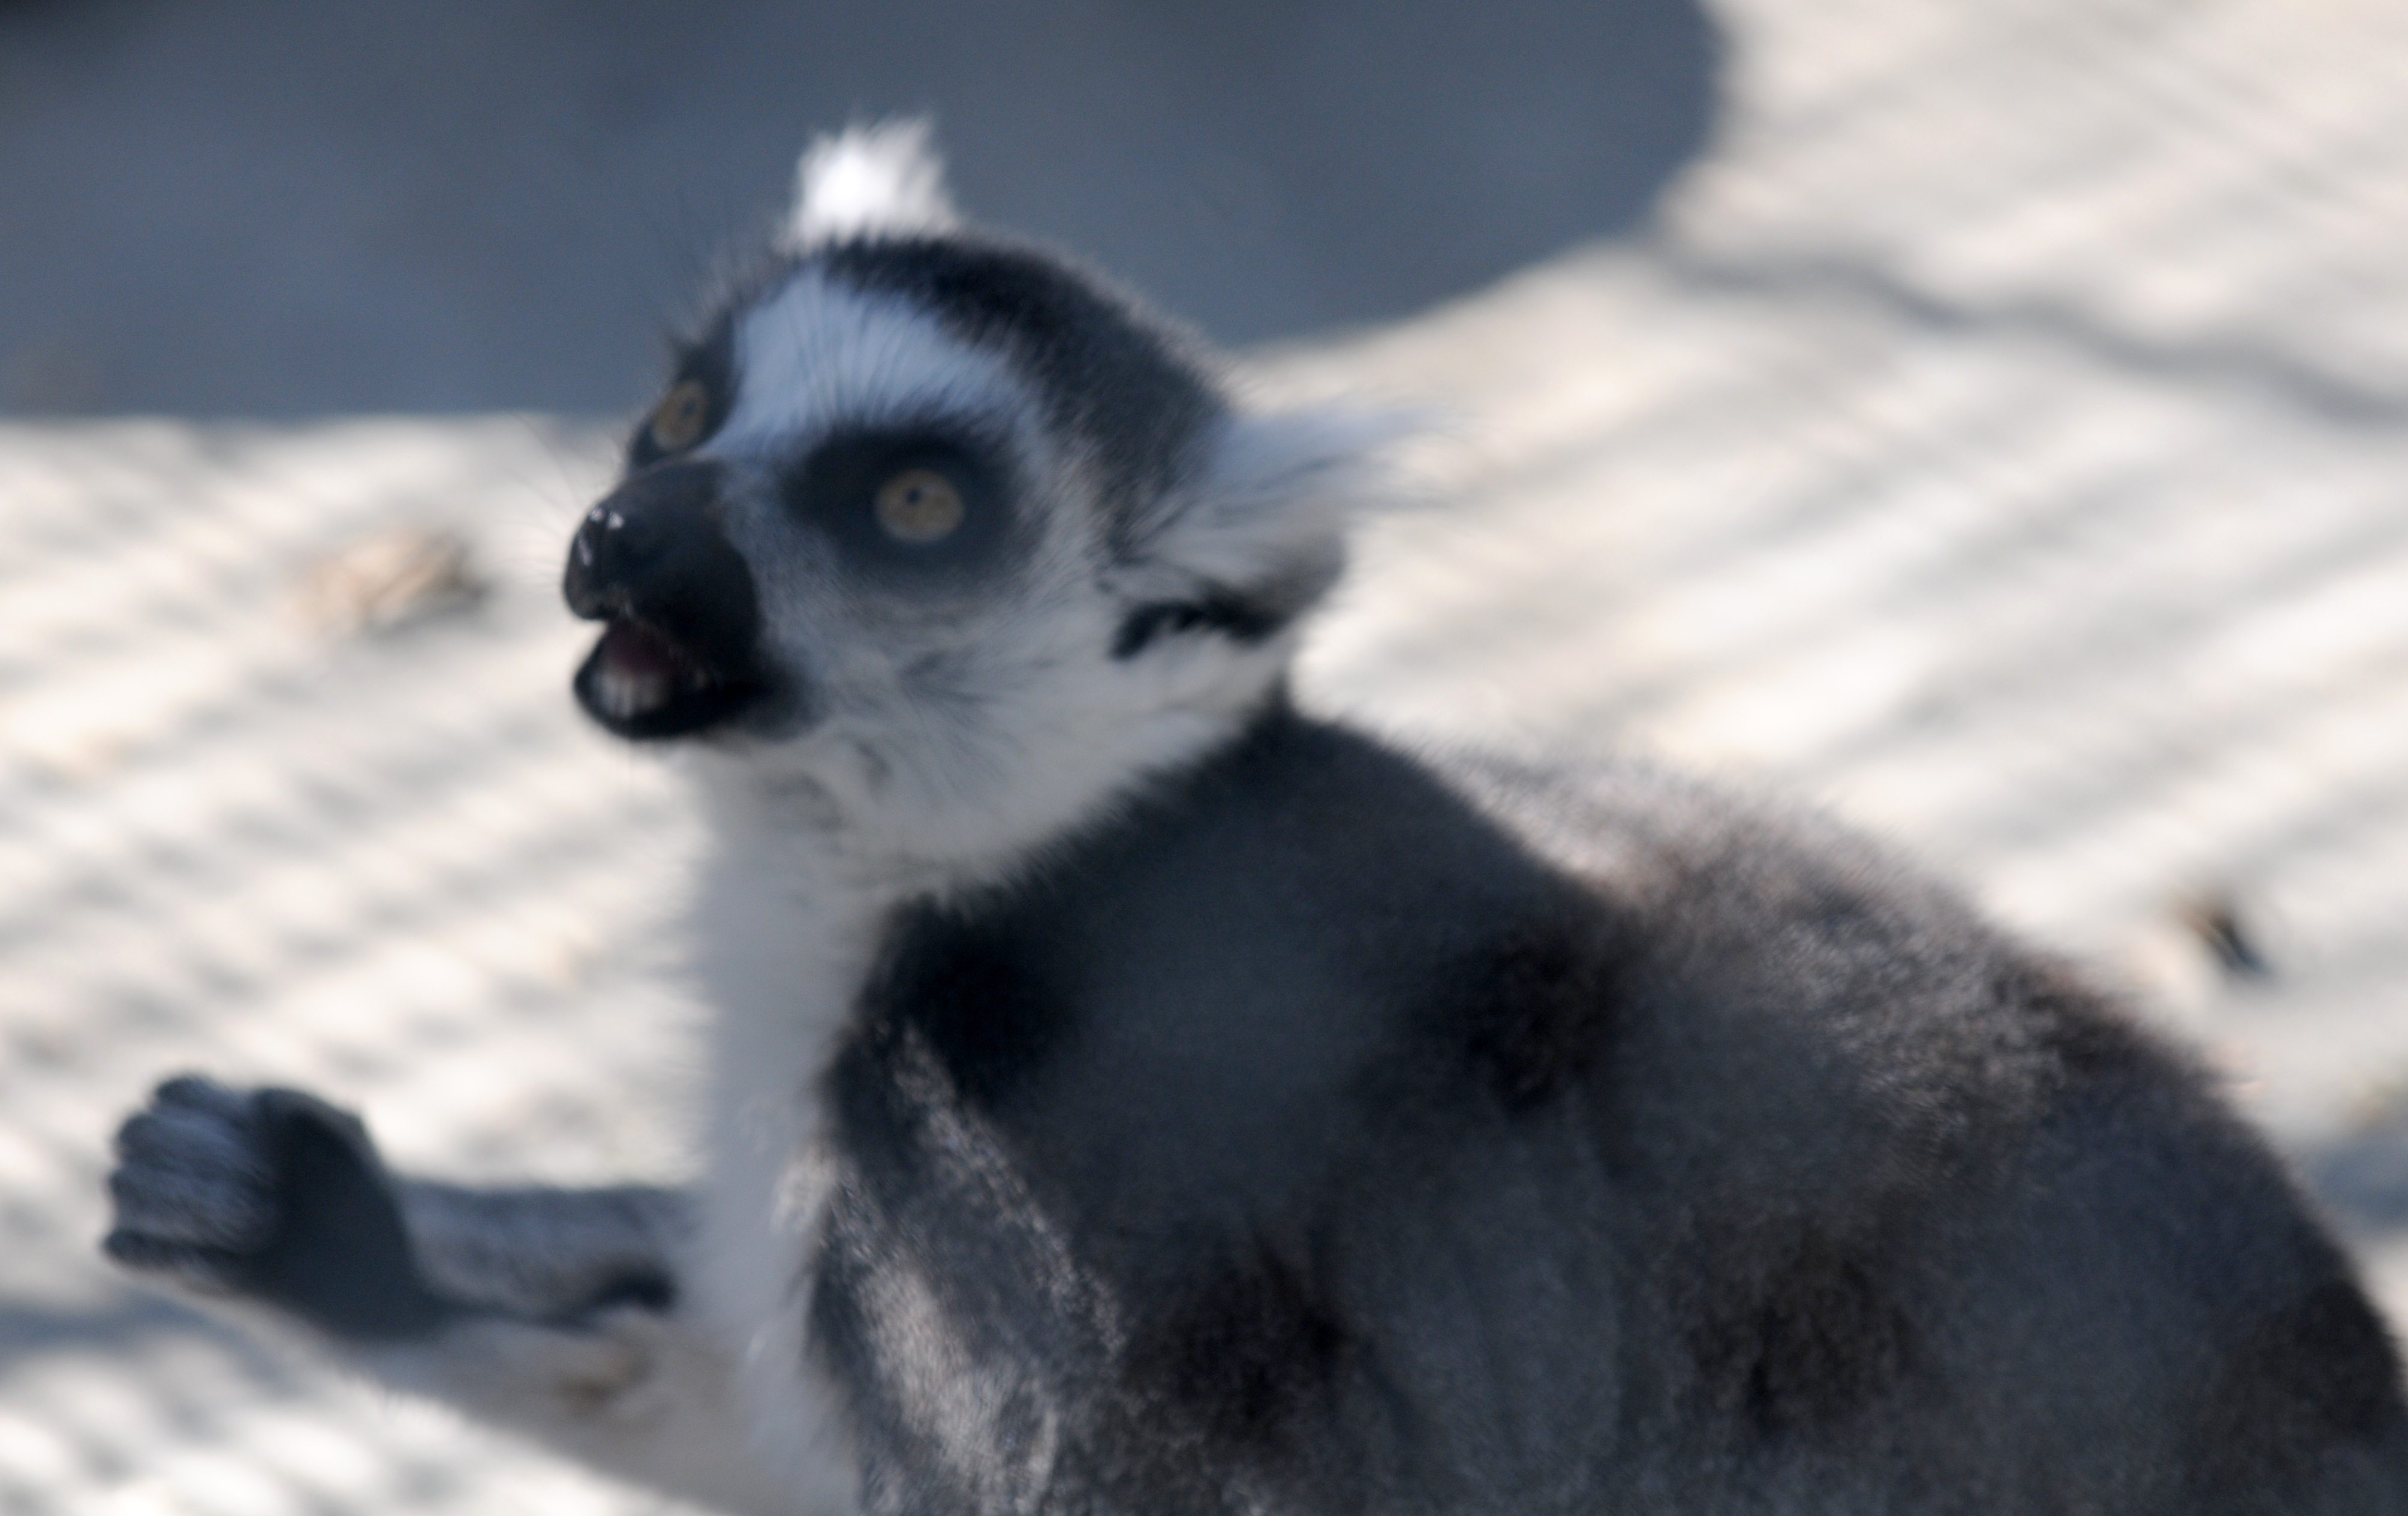 File:Ring-tailed lemur eating closeup at Cougar Mountain Zoological ...